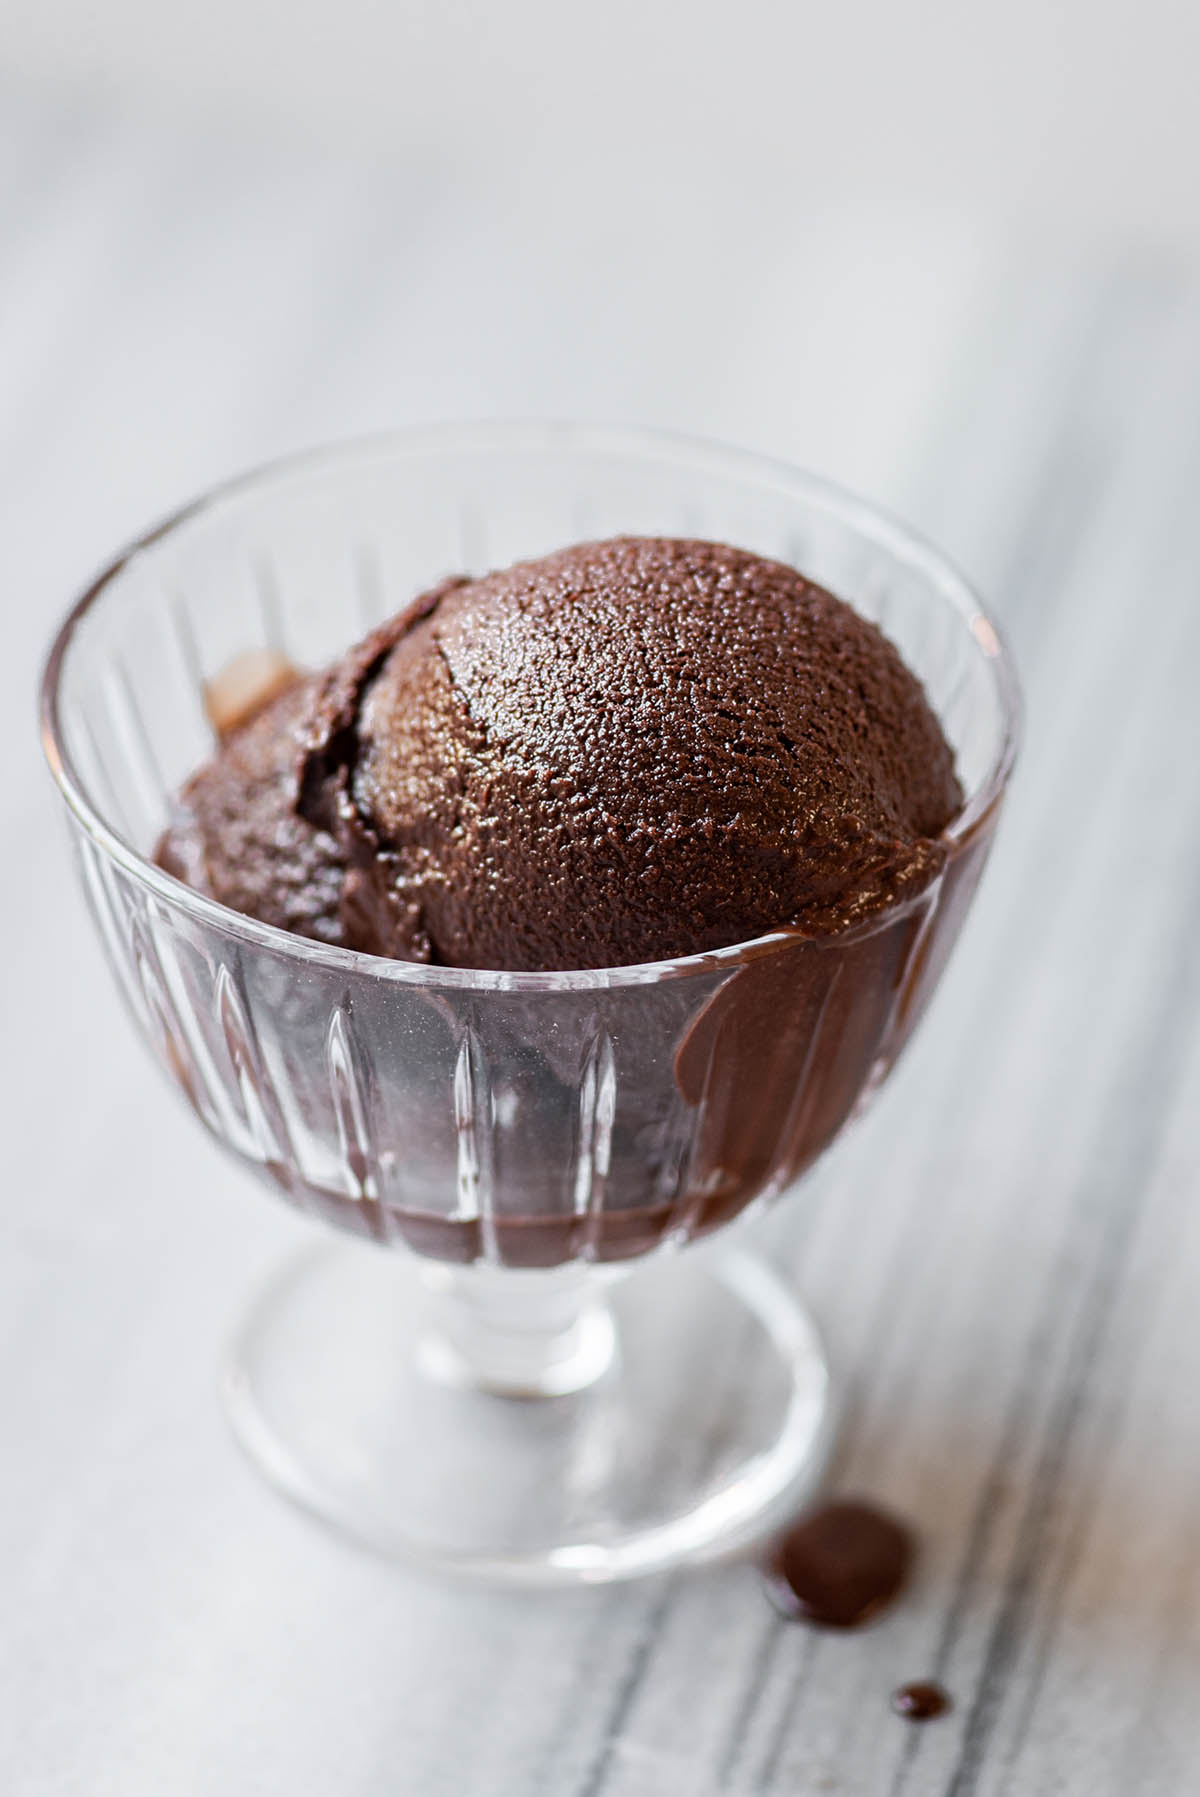 A bowl of chocolate ice cream.